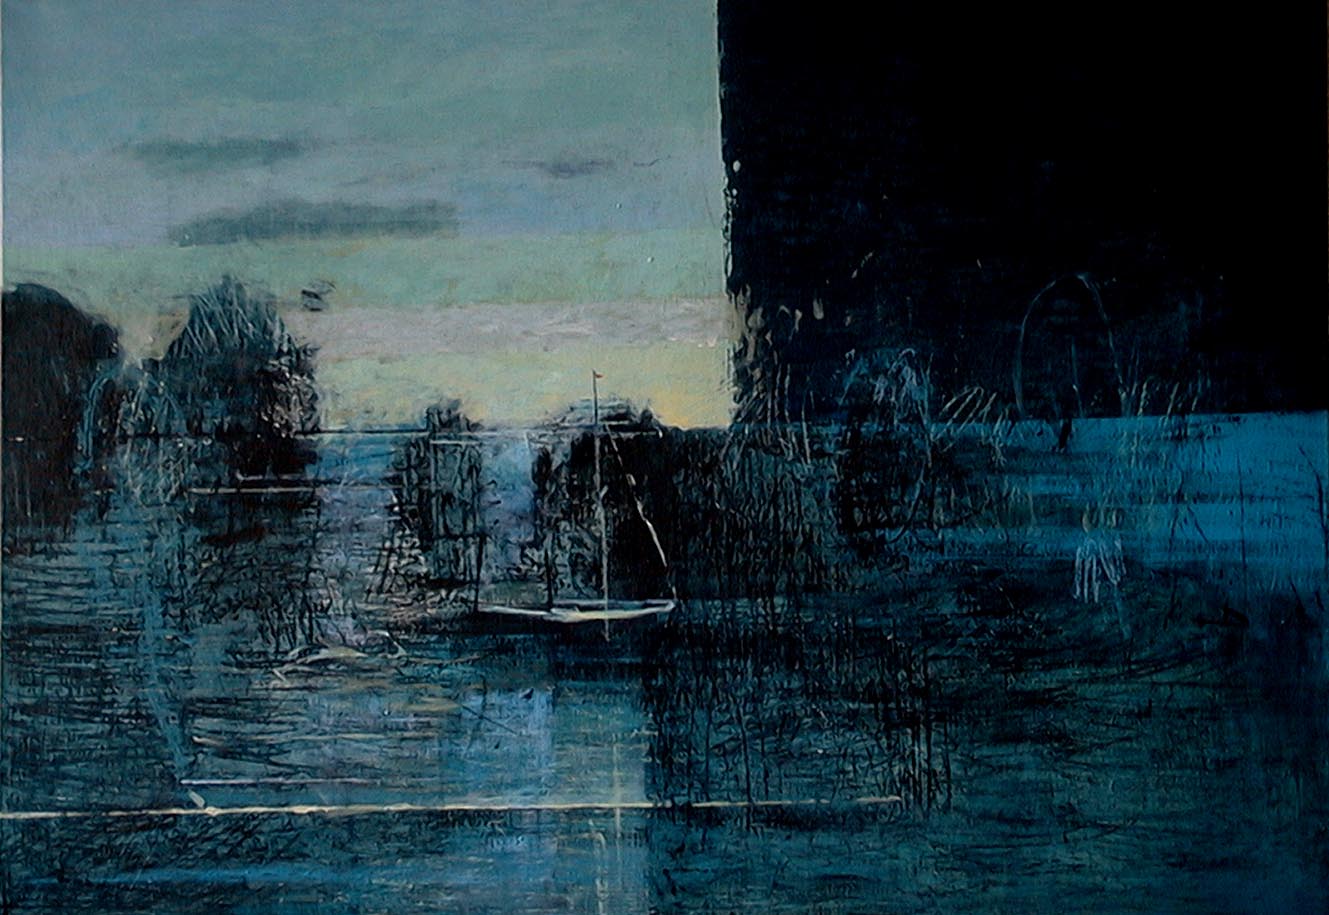 Mendrek Pawel 
"Life of the Horizon 18 Uhr 05", 2002
acrílico / tela
100 x 140 cm